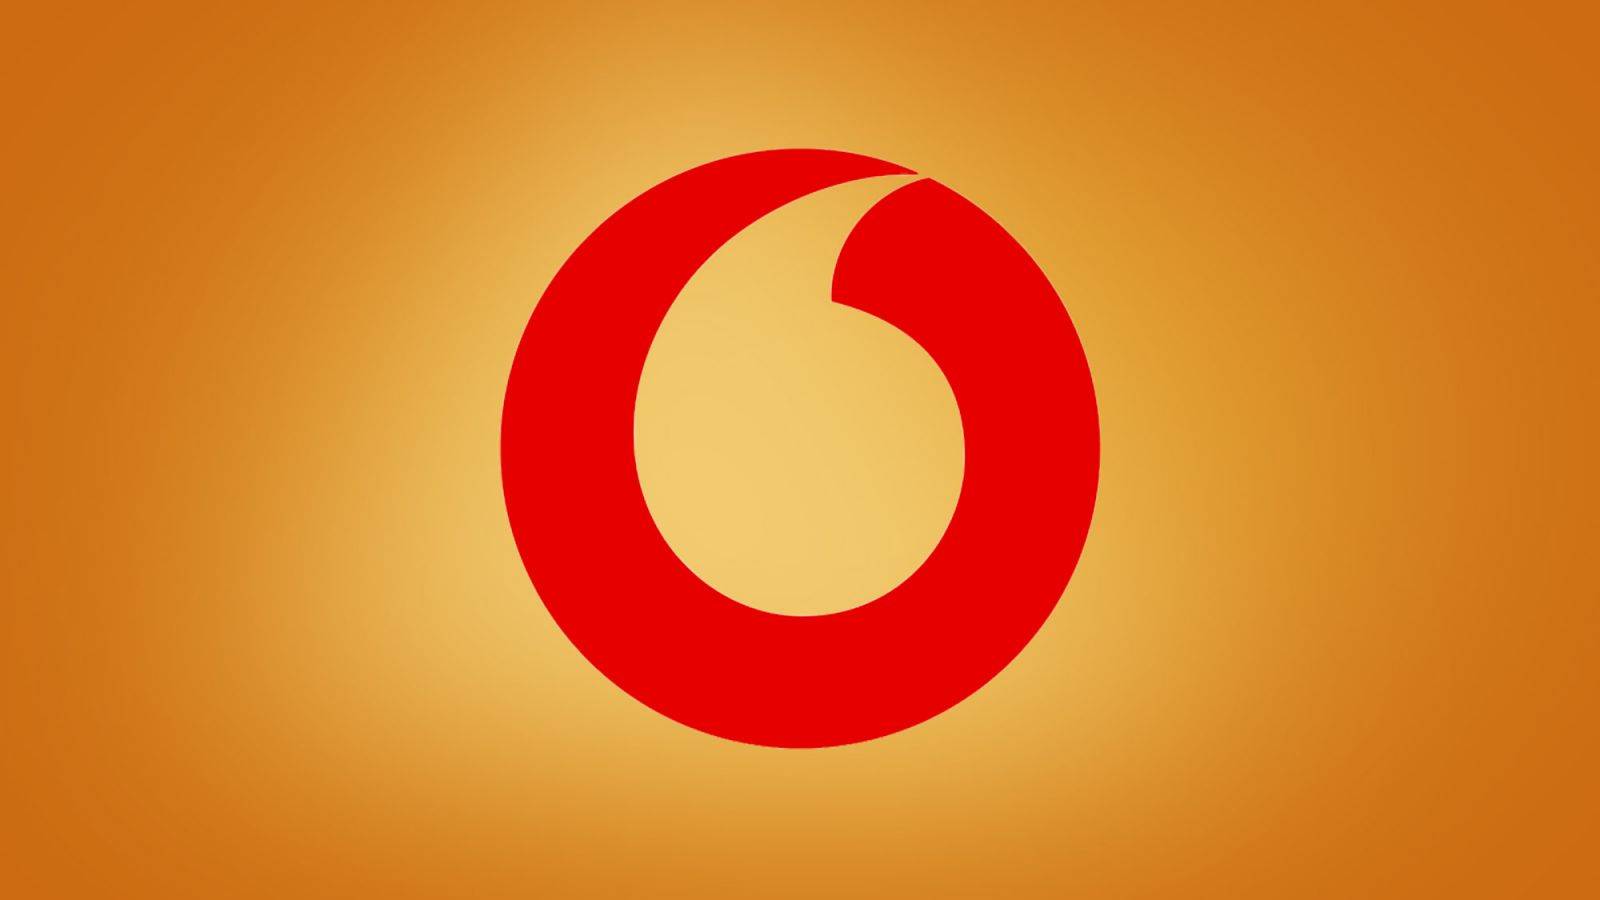 Vodafone DUPA Black Friday au Ramas Reduceri BUNE la Aceste Telefoane Mobile